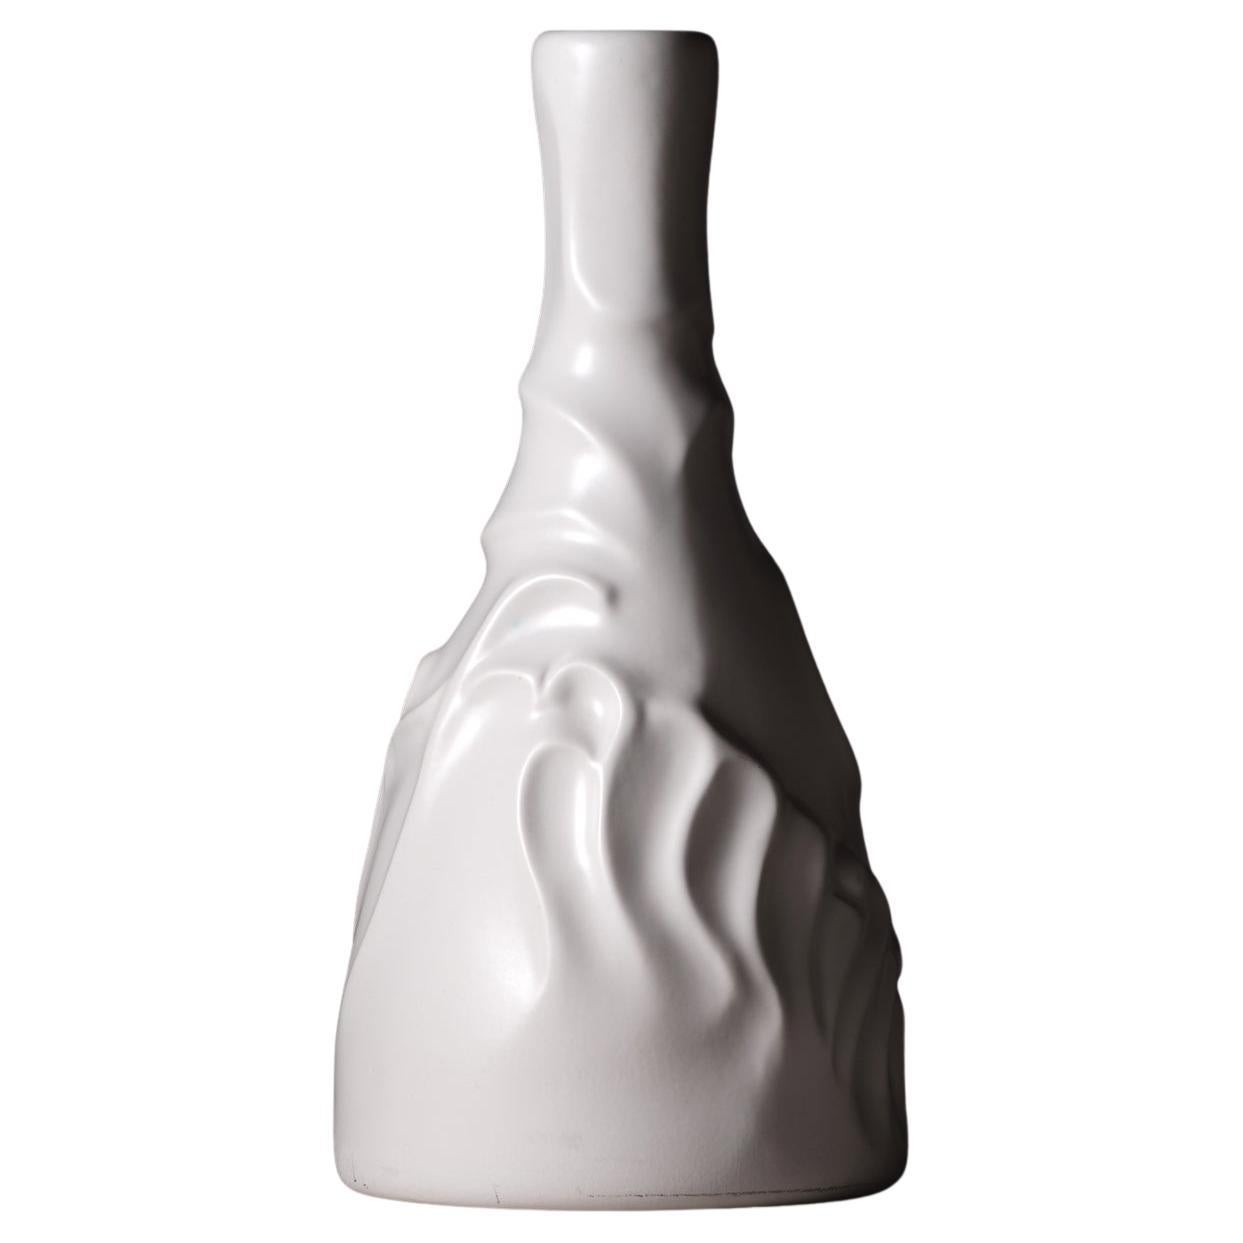 White Ceramic Casa De Familia Bottle Vase by Josep Maria Jujol, Spanish design For Sale